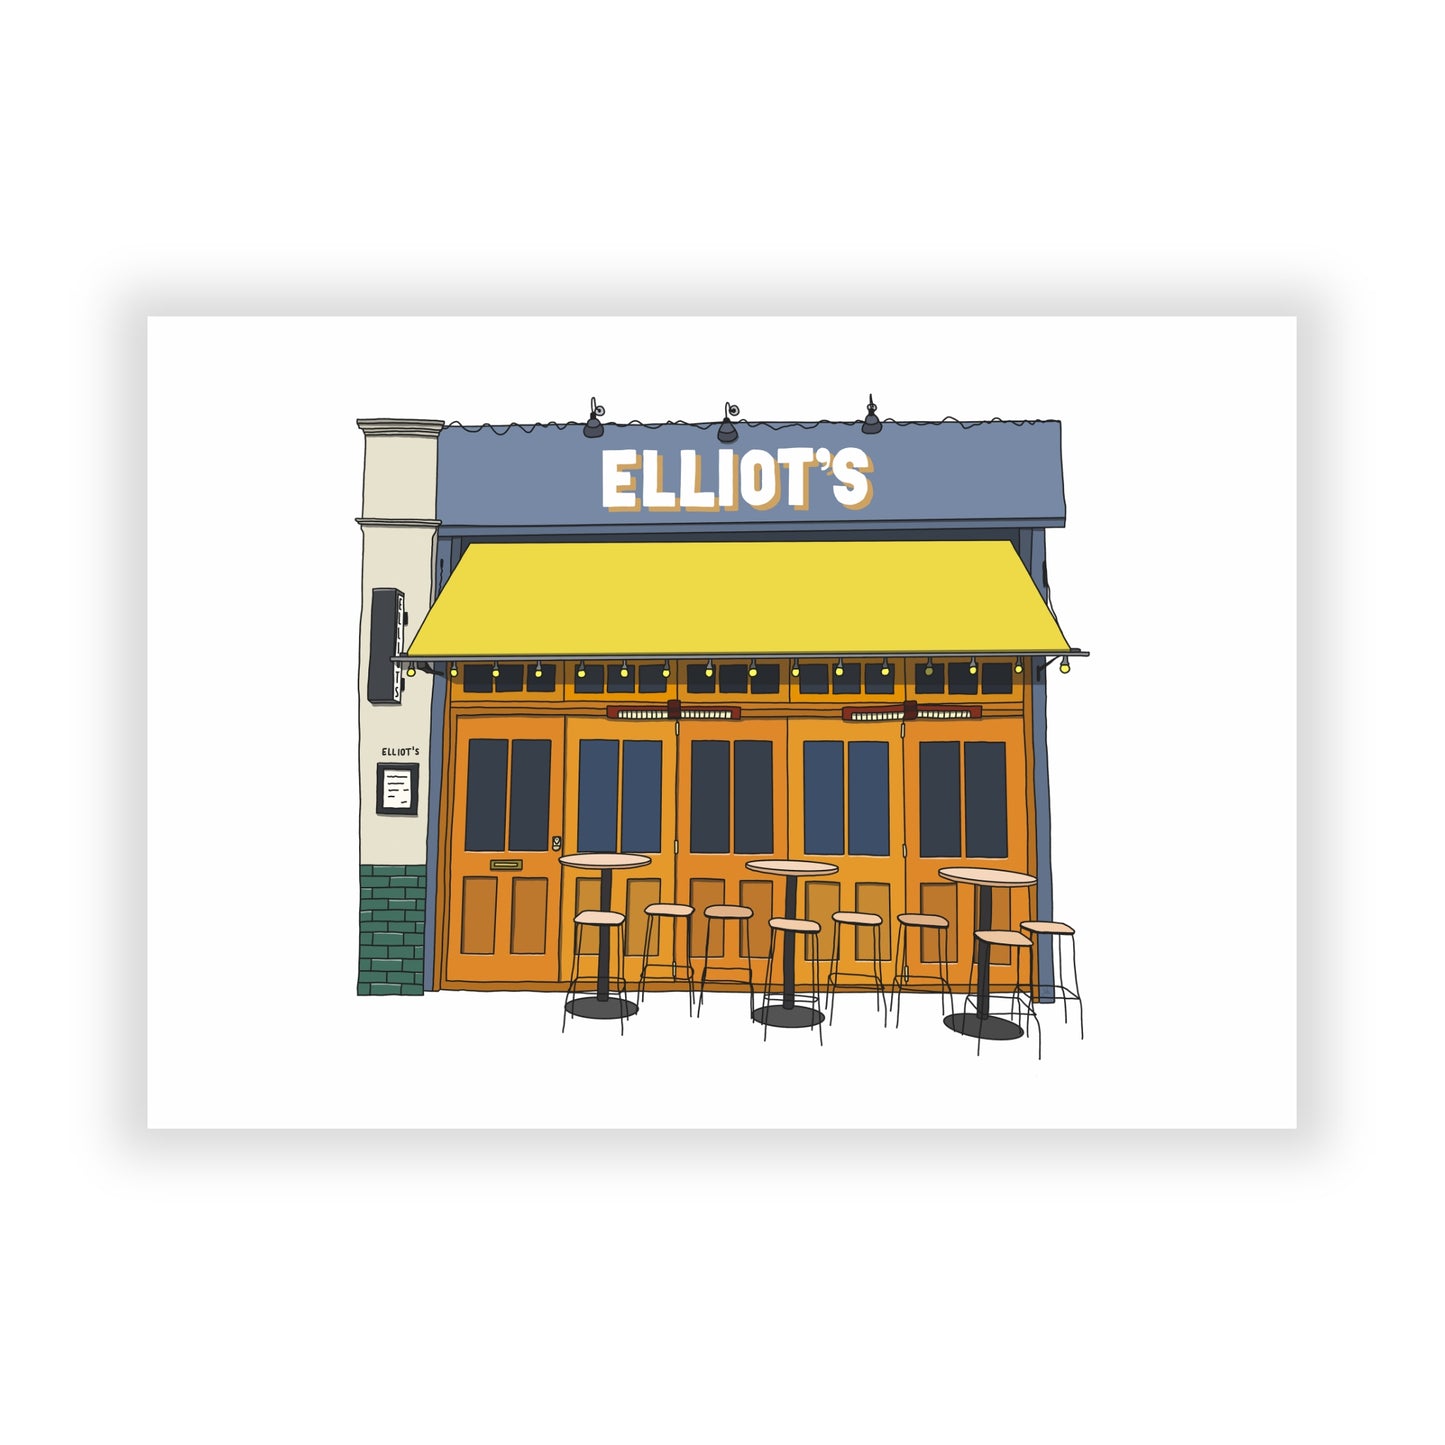 Elliot's Borough Market Illustration